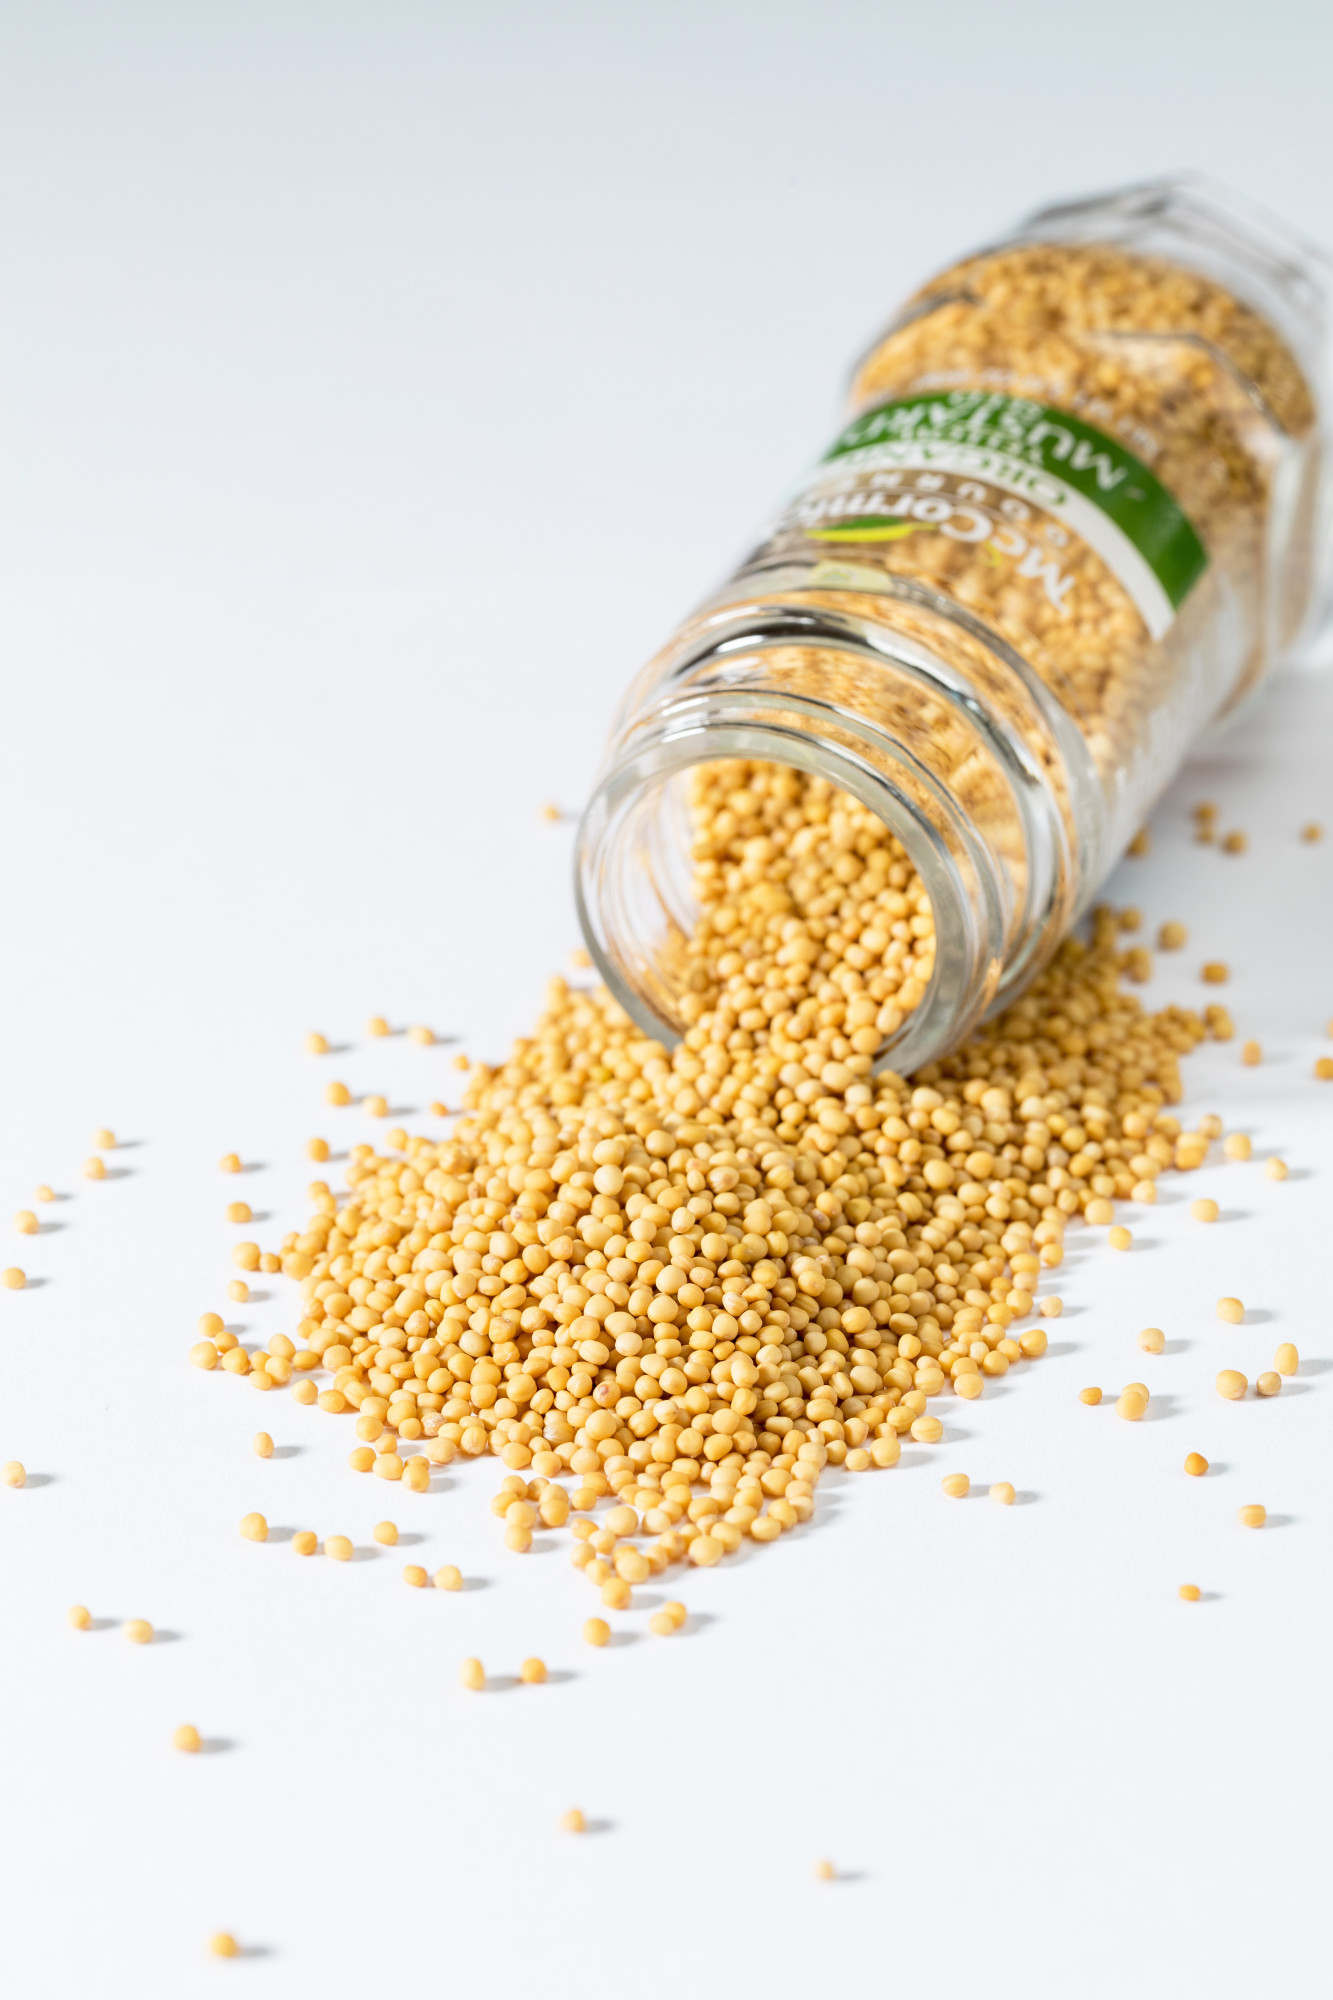 McCormick Gourmet Organic Yellow Mustard Seed, 2.12 oz Mixed Spices & Seasonings - image 2 of 11